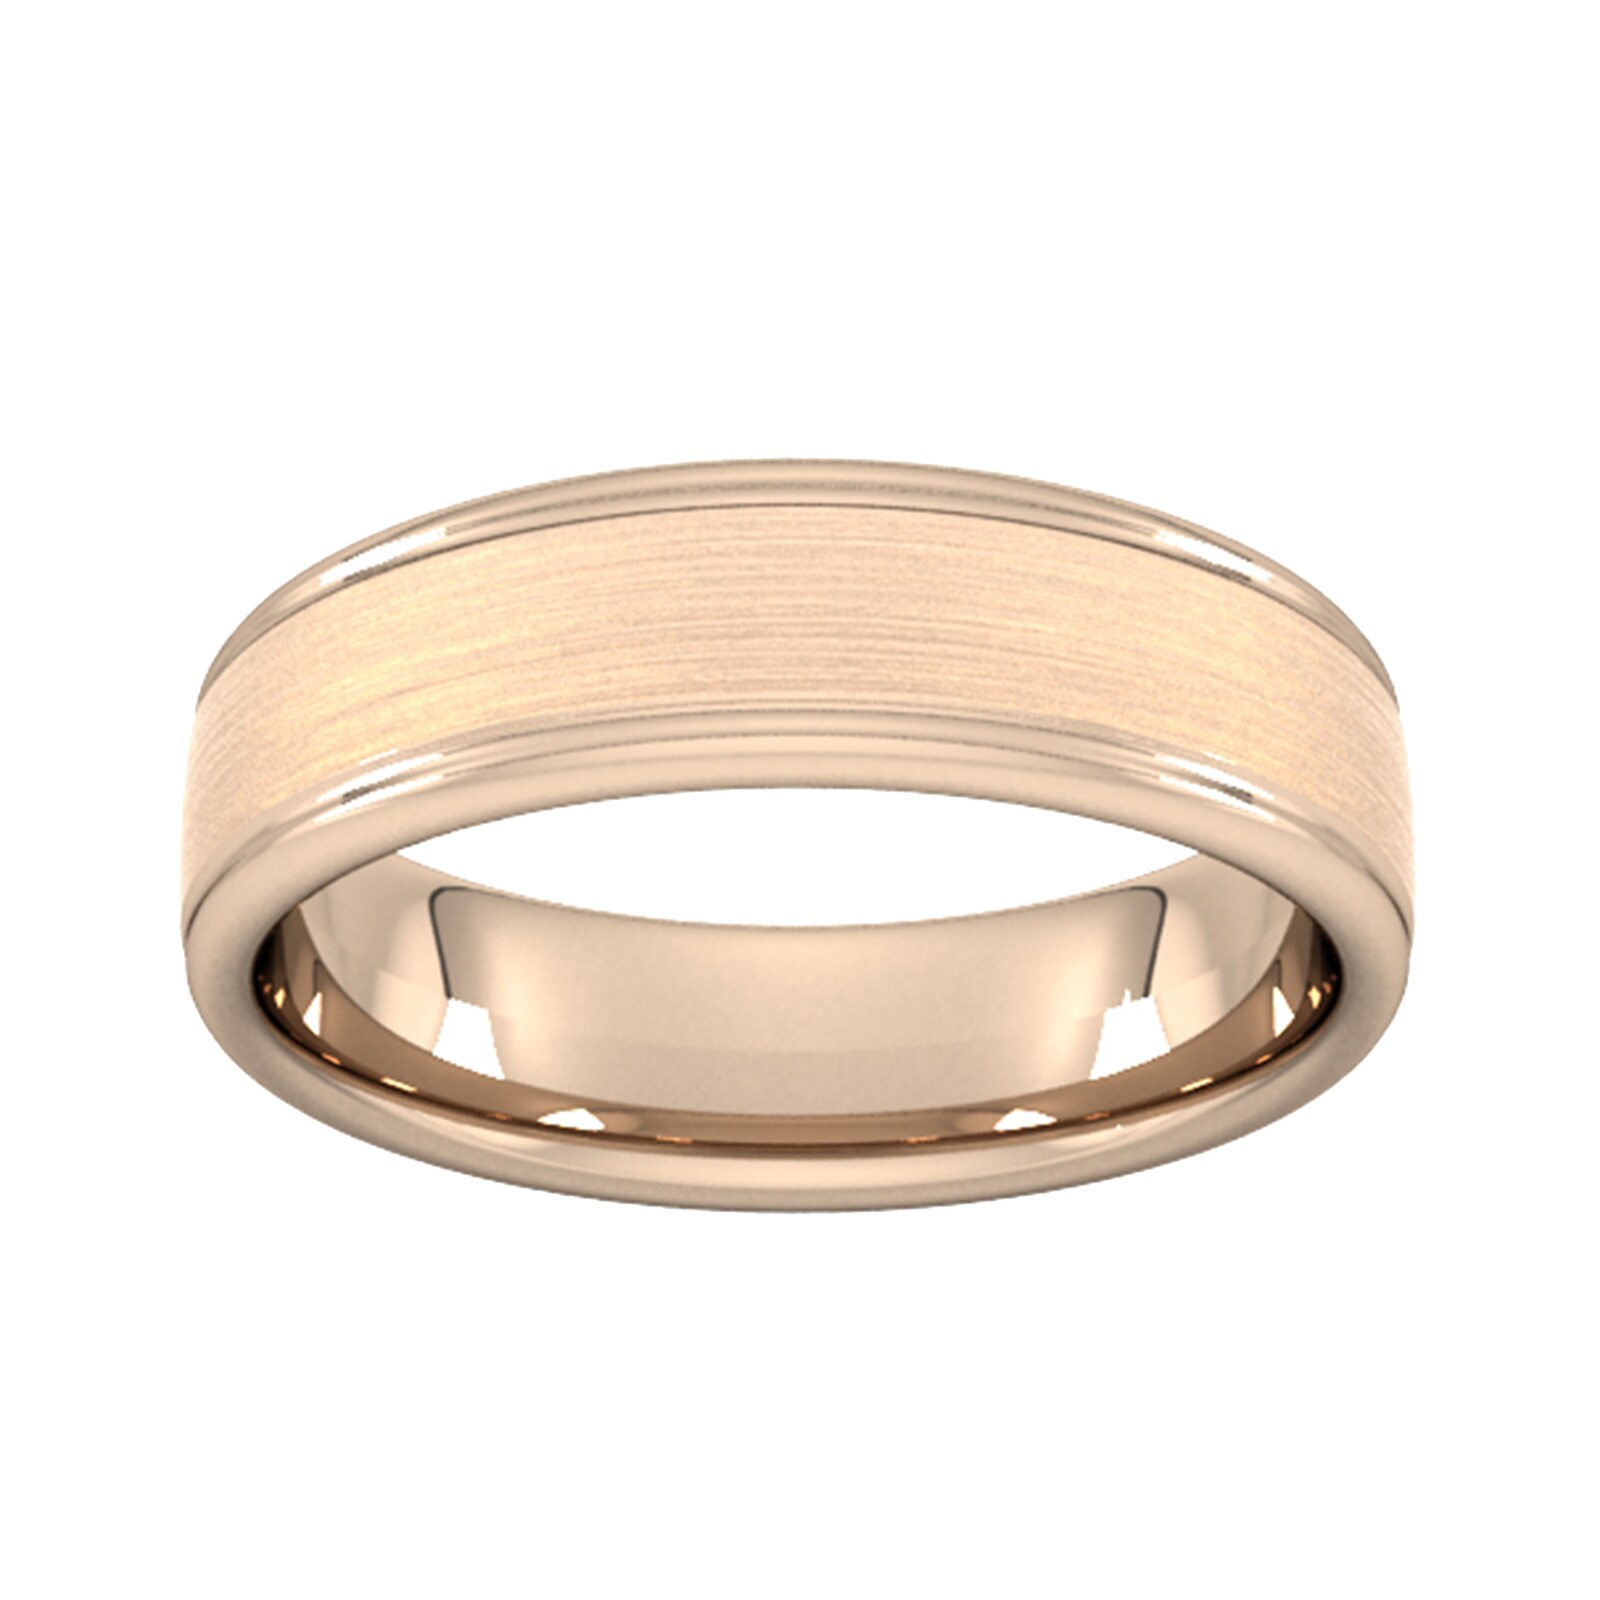 6mm D Shape Standard Matt Centre With Grooves Wedding Ring In 9 Carat Rose Gold - Ring Size J